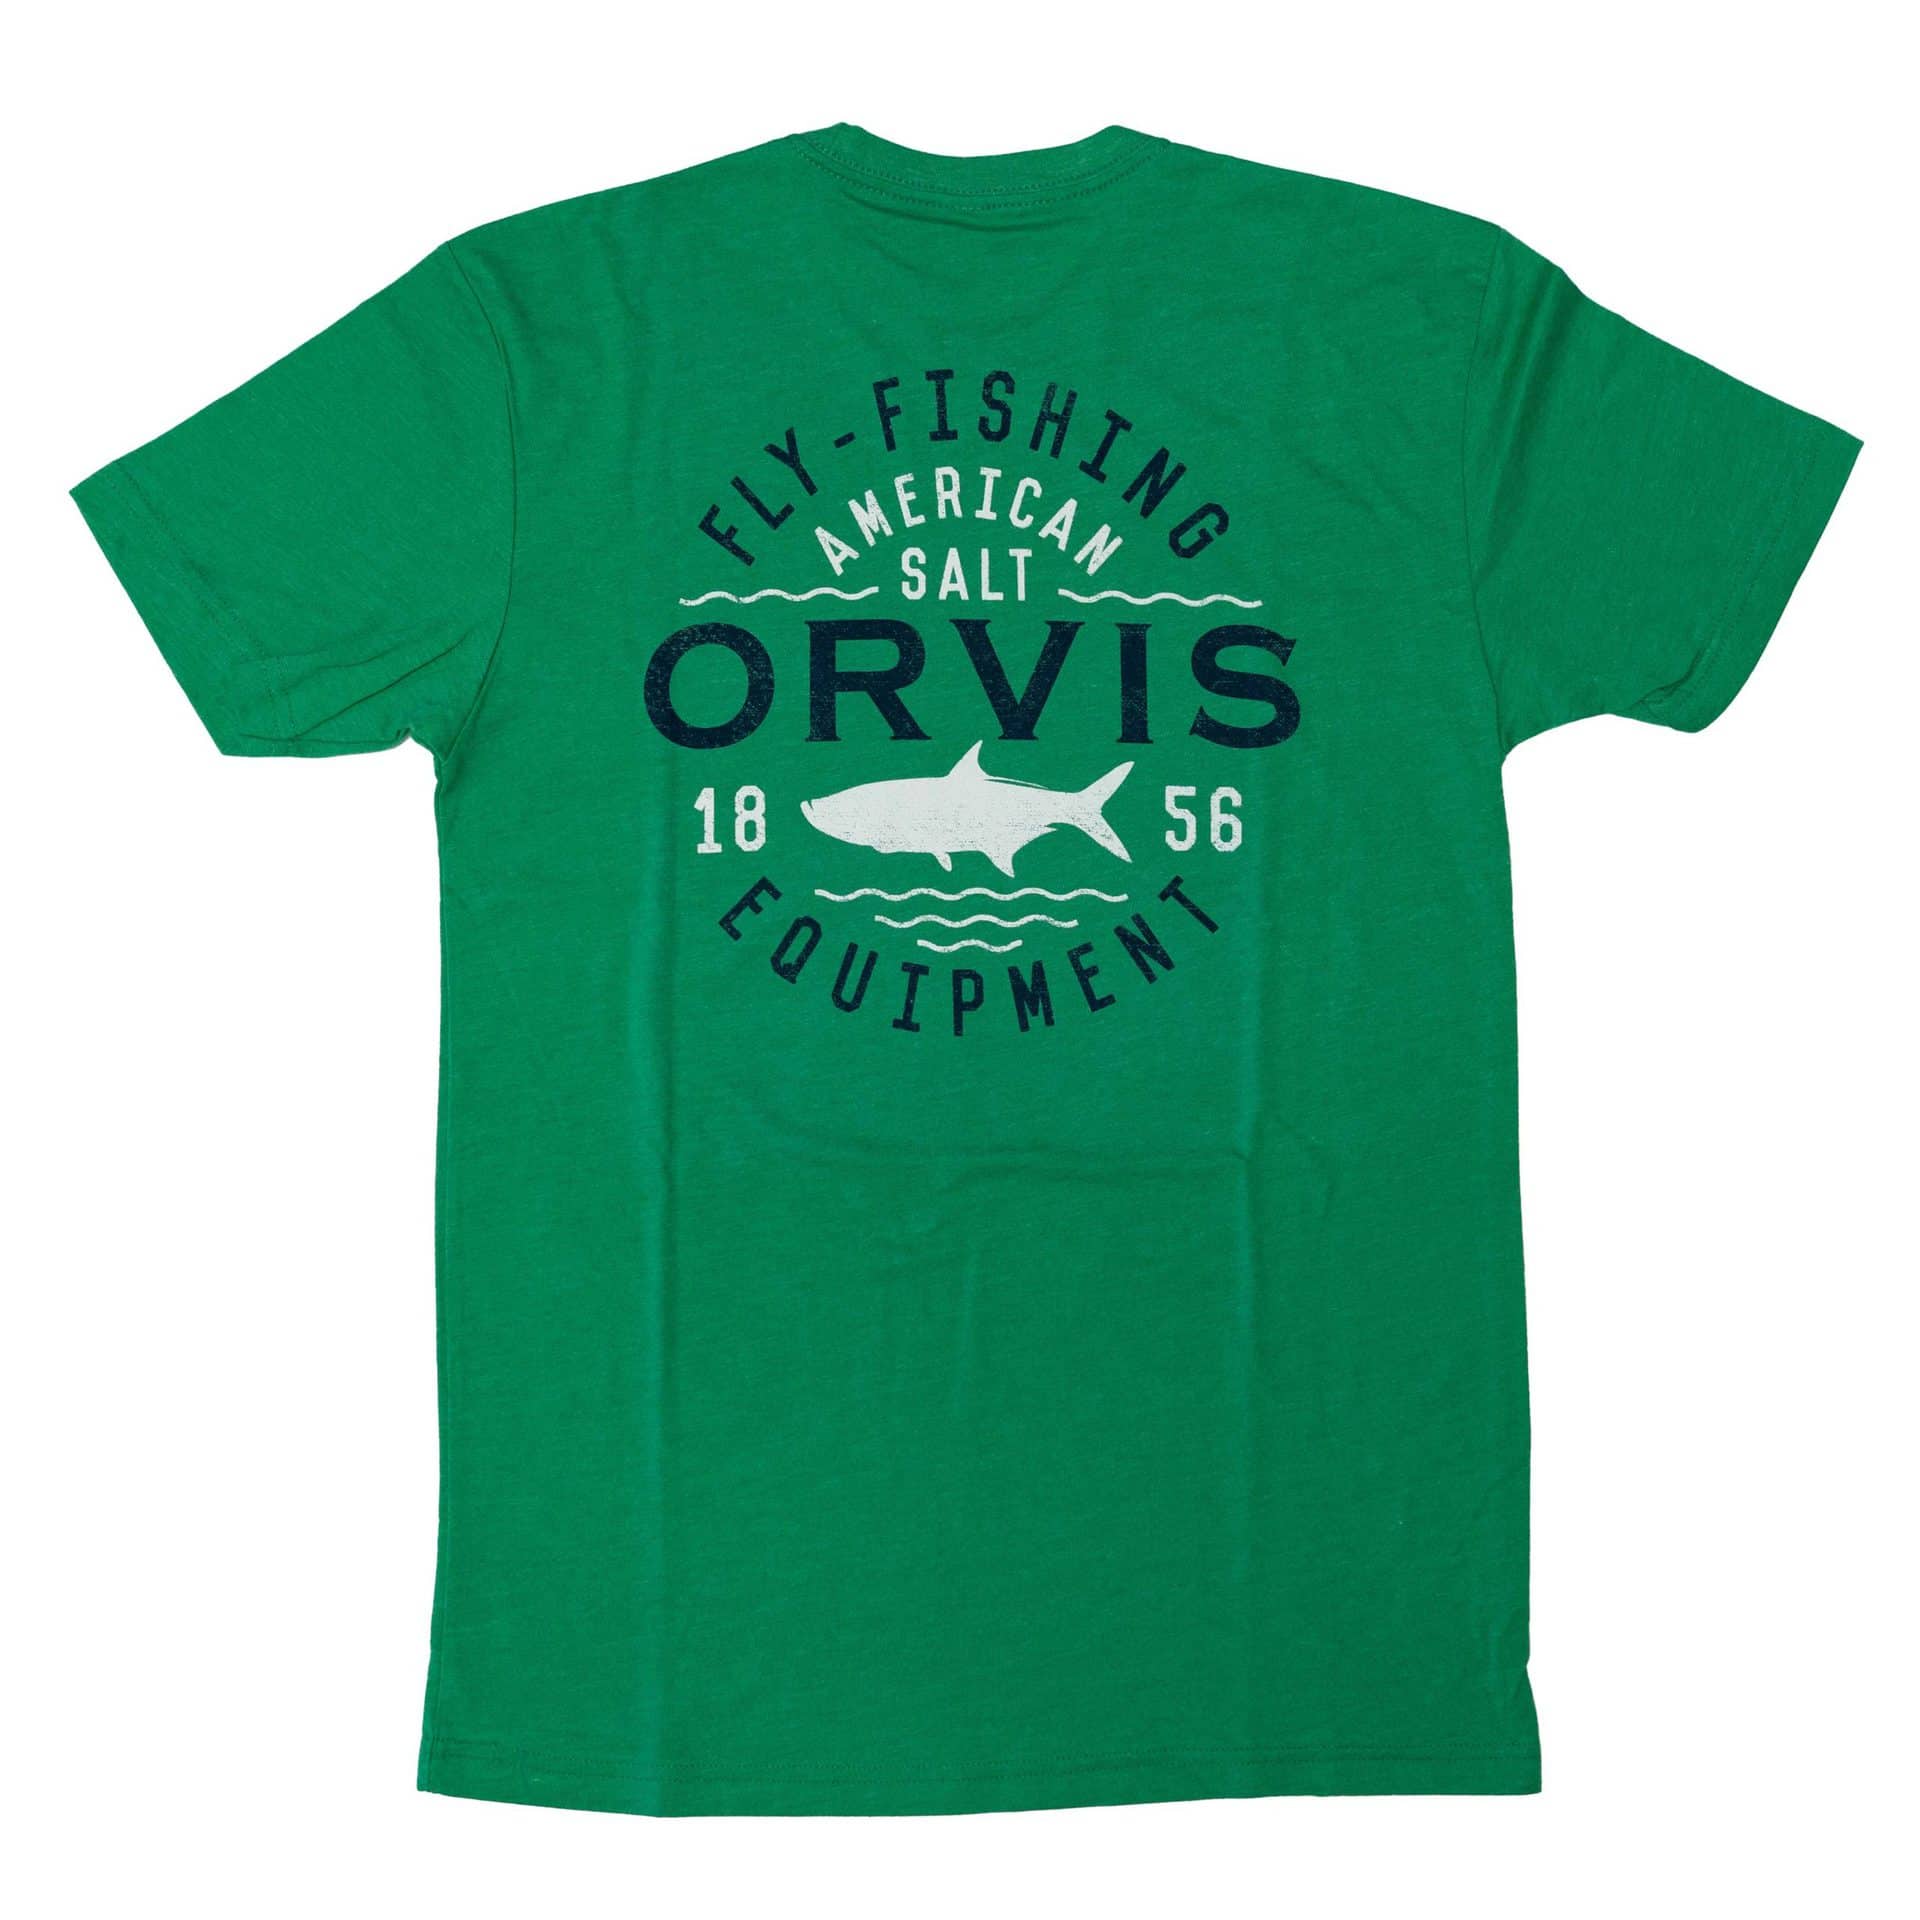 Orvis Shirts  Ole Florida Fly Shop